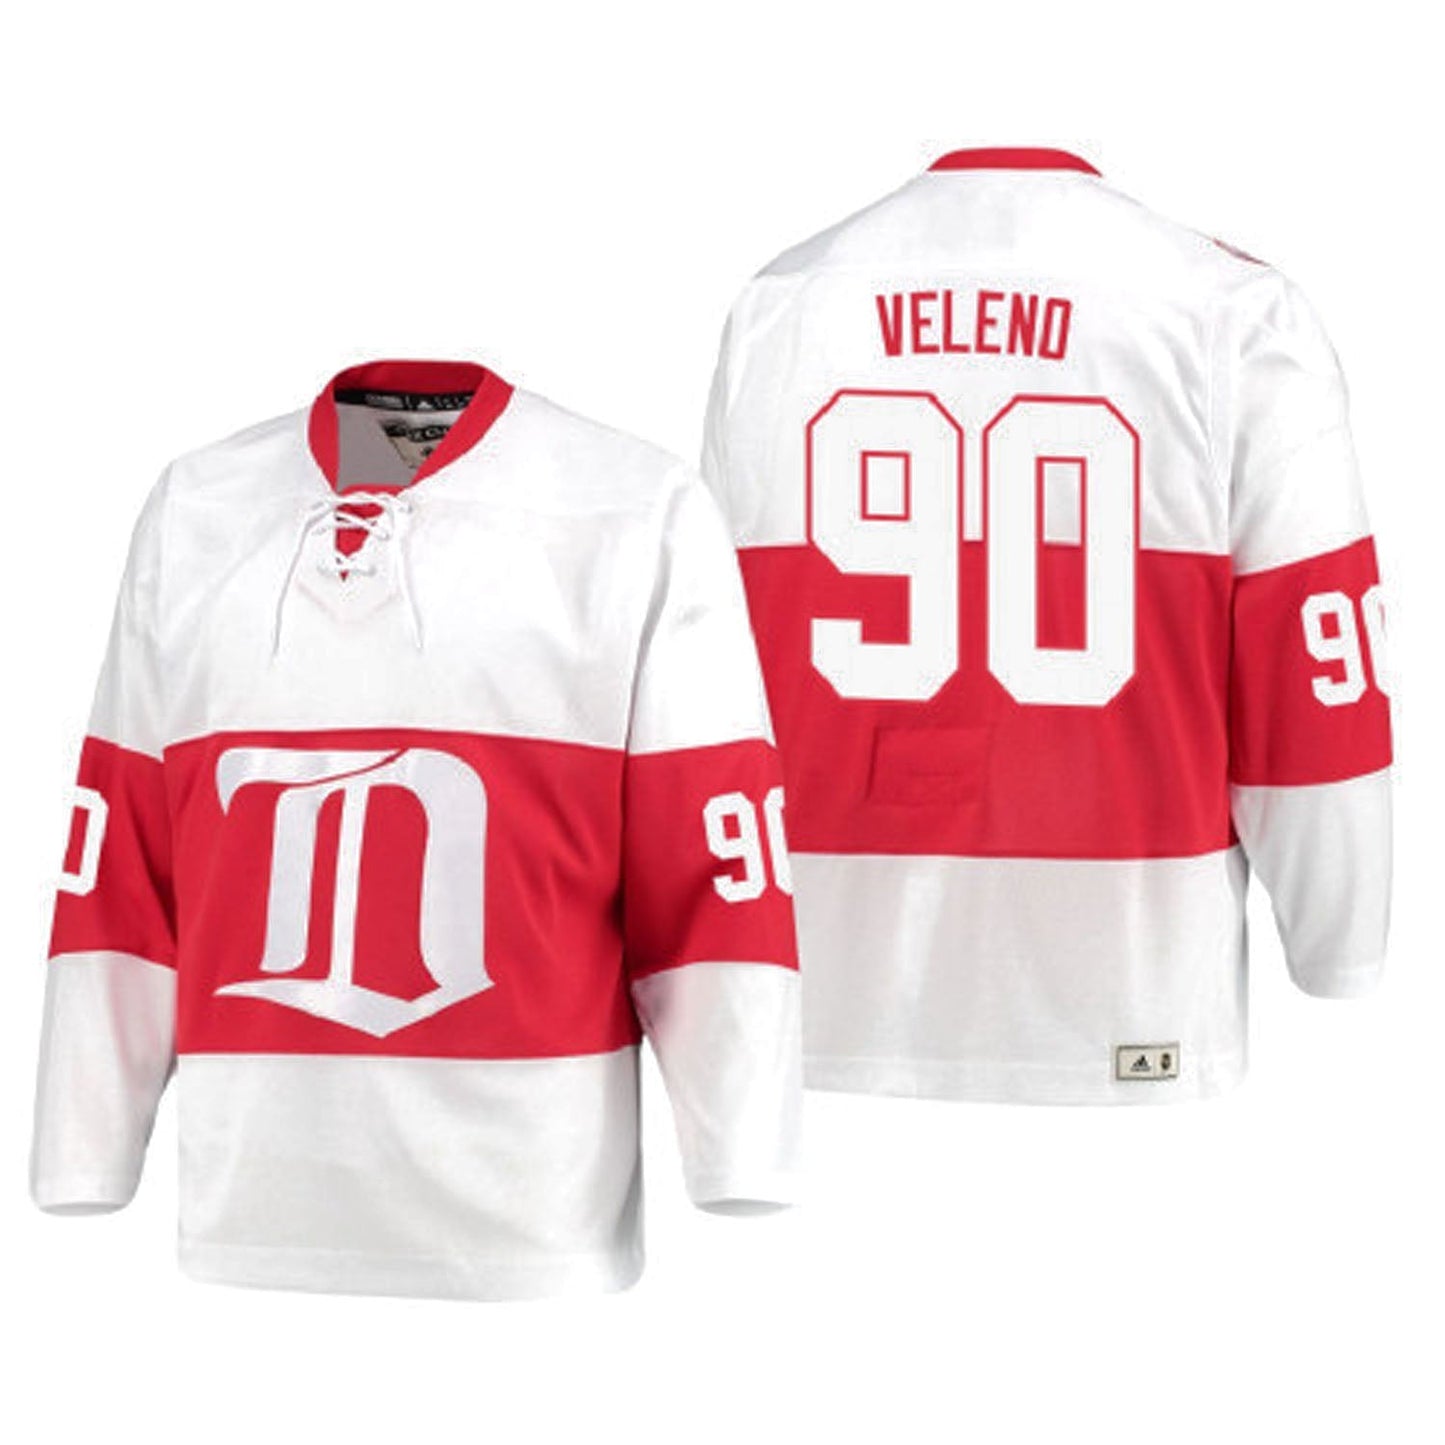 NHL Joe Veleno Detroit Red Wings 90 Jersey